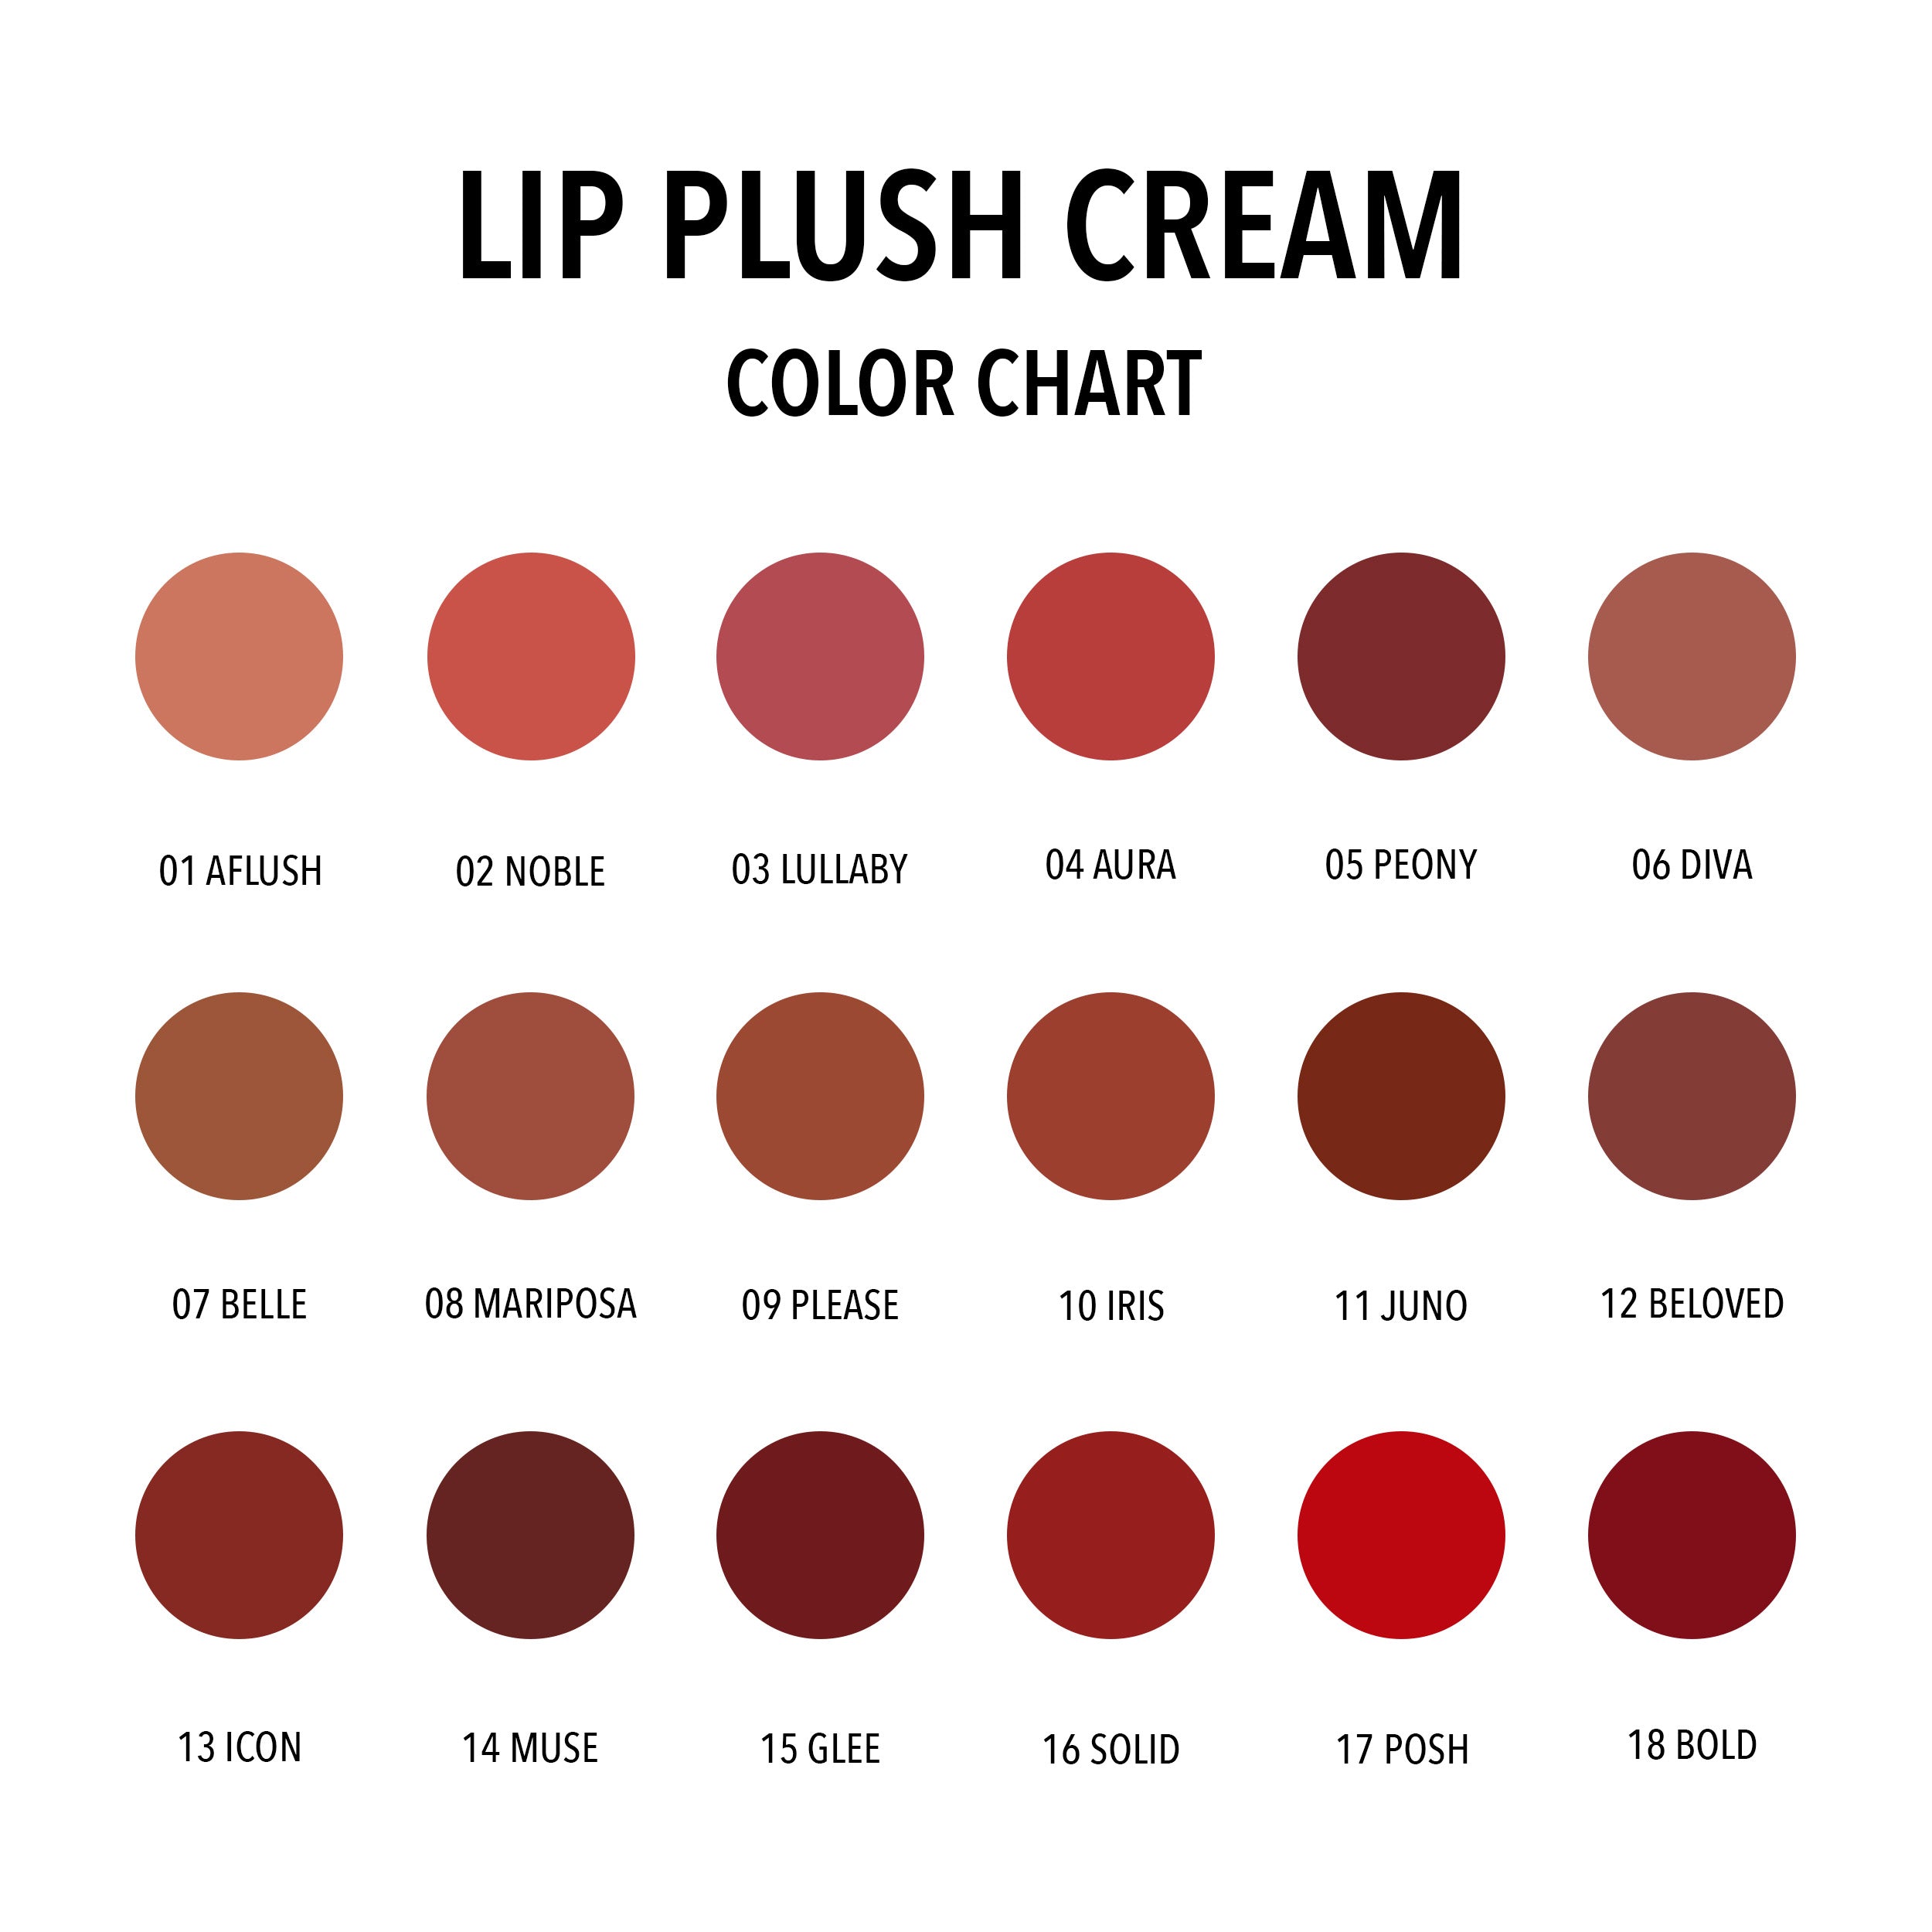 Lip Plush Cream (008, Mariposa)